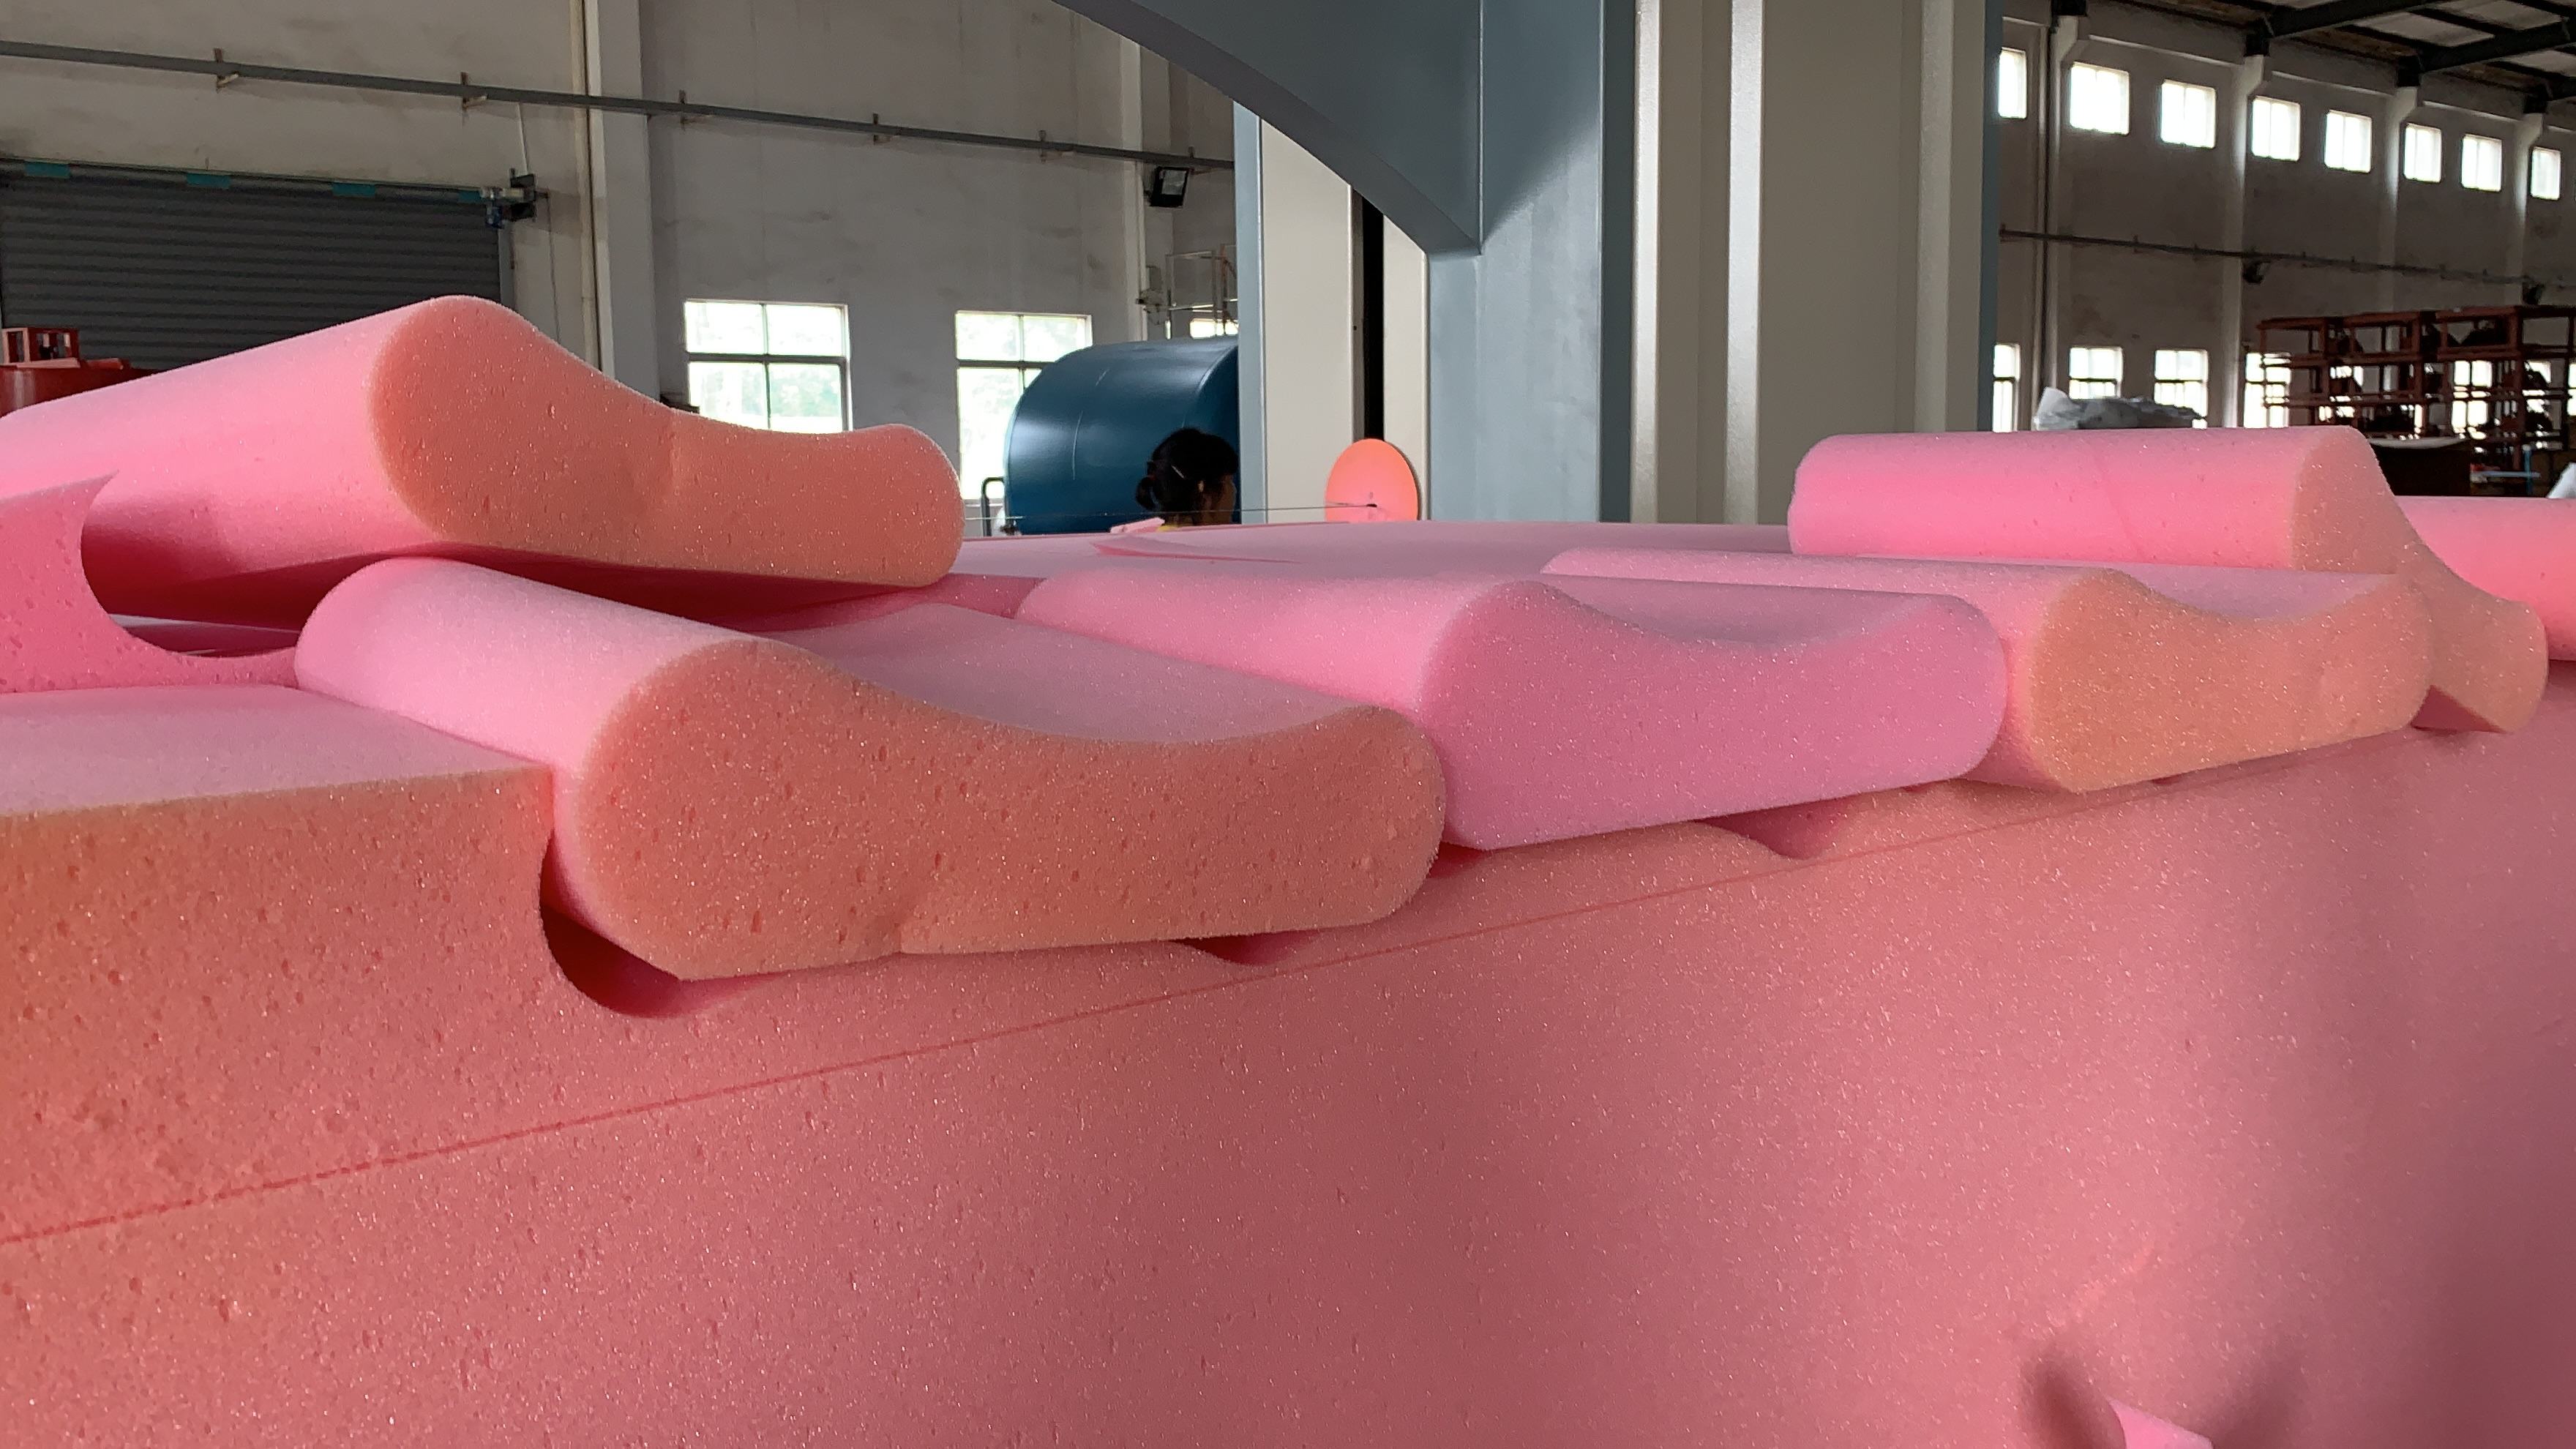 Foam Cutting Machine Waste Sponge Eva Polyurethane 2019 Steel Band Power Technical saw tools